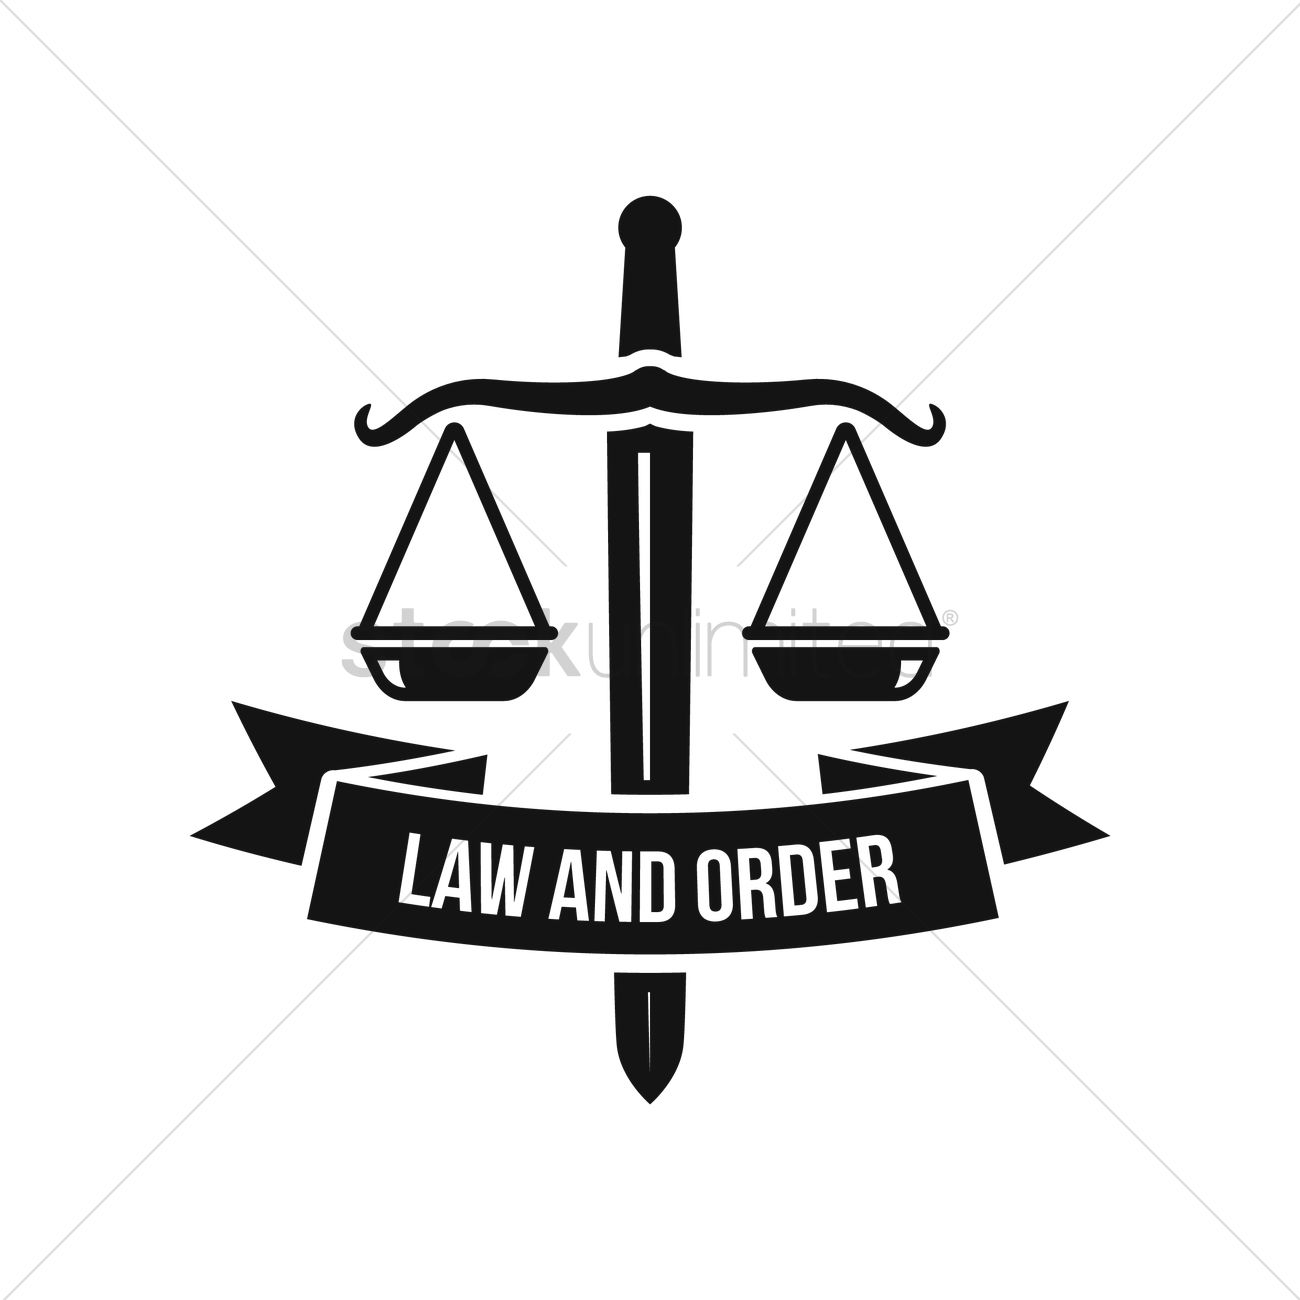 Закон этикетки. Закон и порядок эмблема. Закон стикер. Ордер логотип. Закон и порядок рисунок.